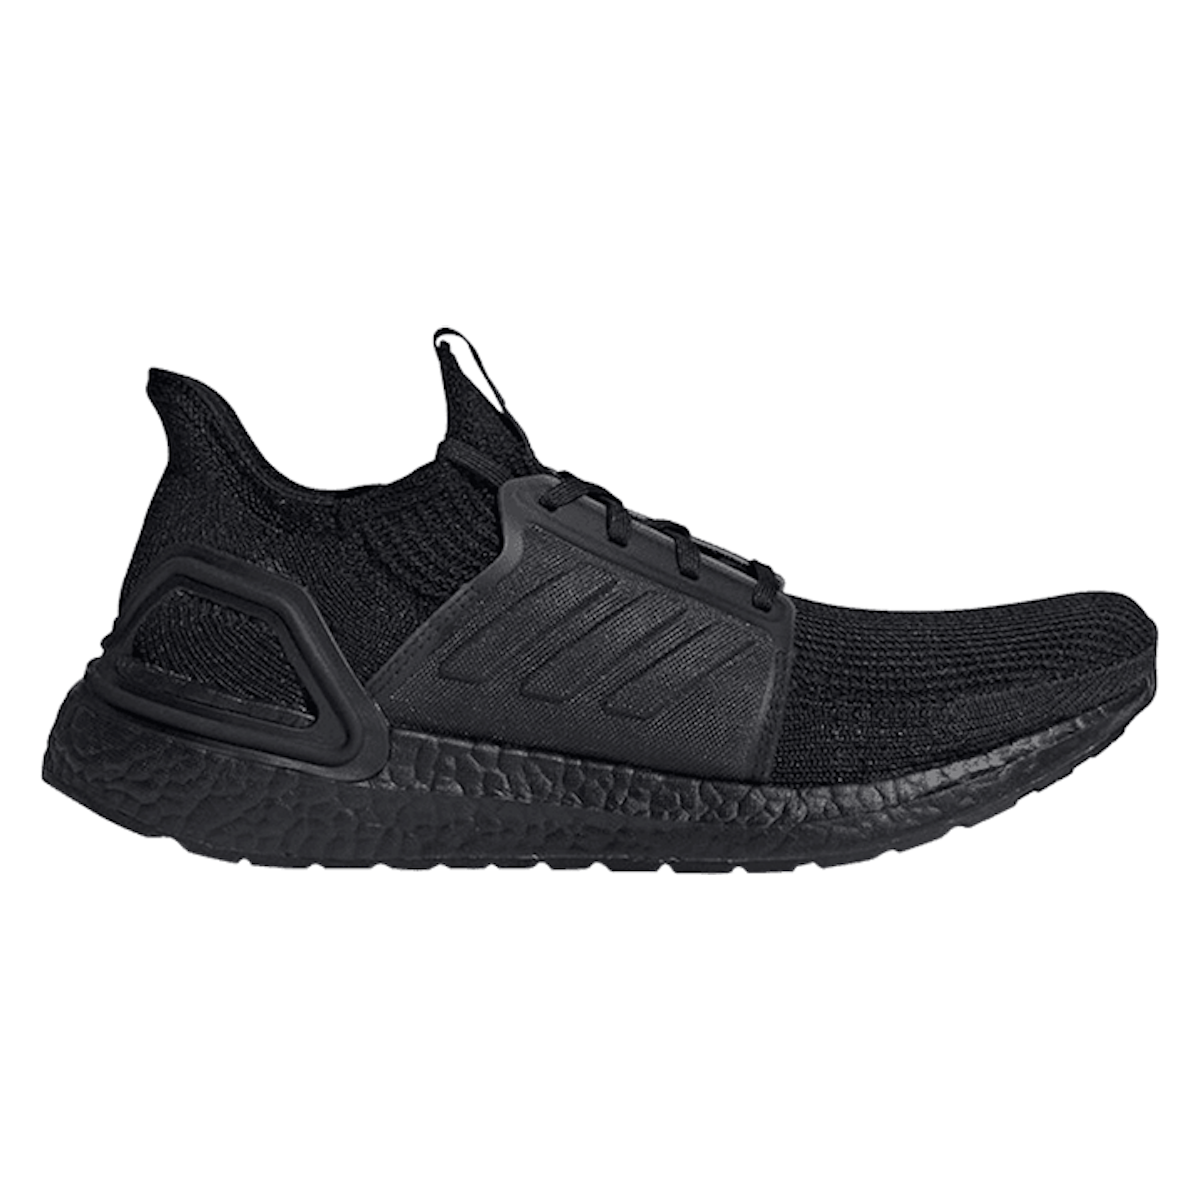 Adidas Ultra Boost 19 "Triple Black"